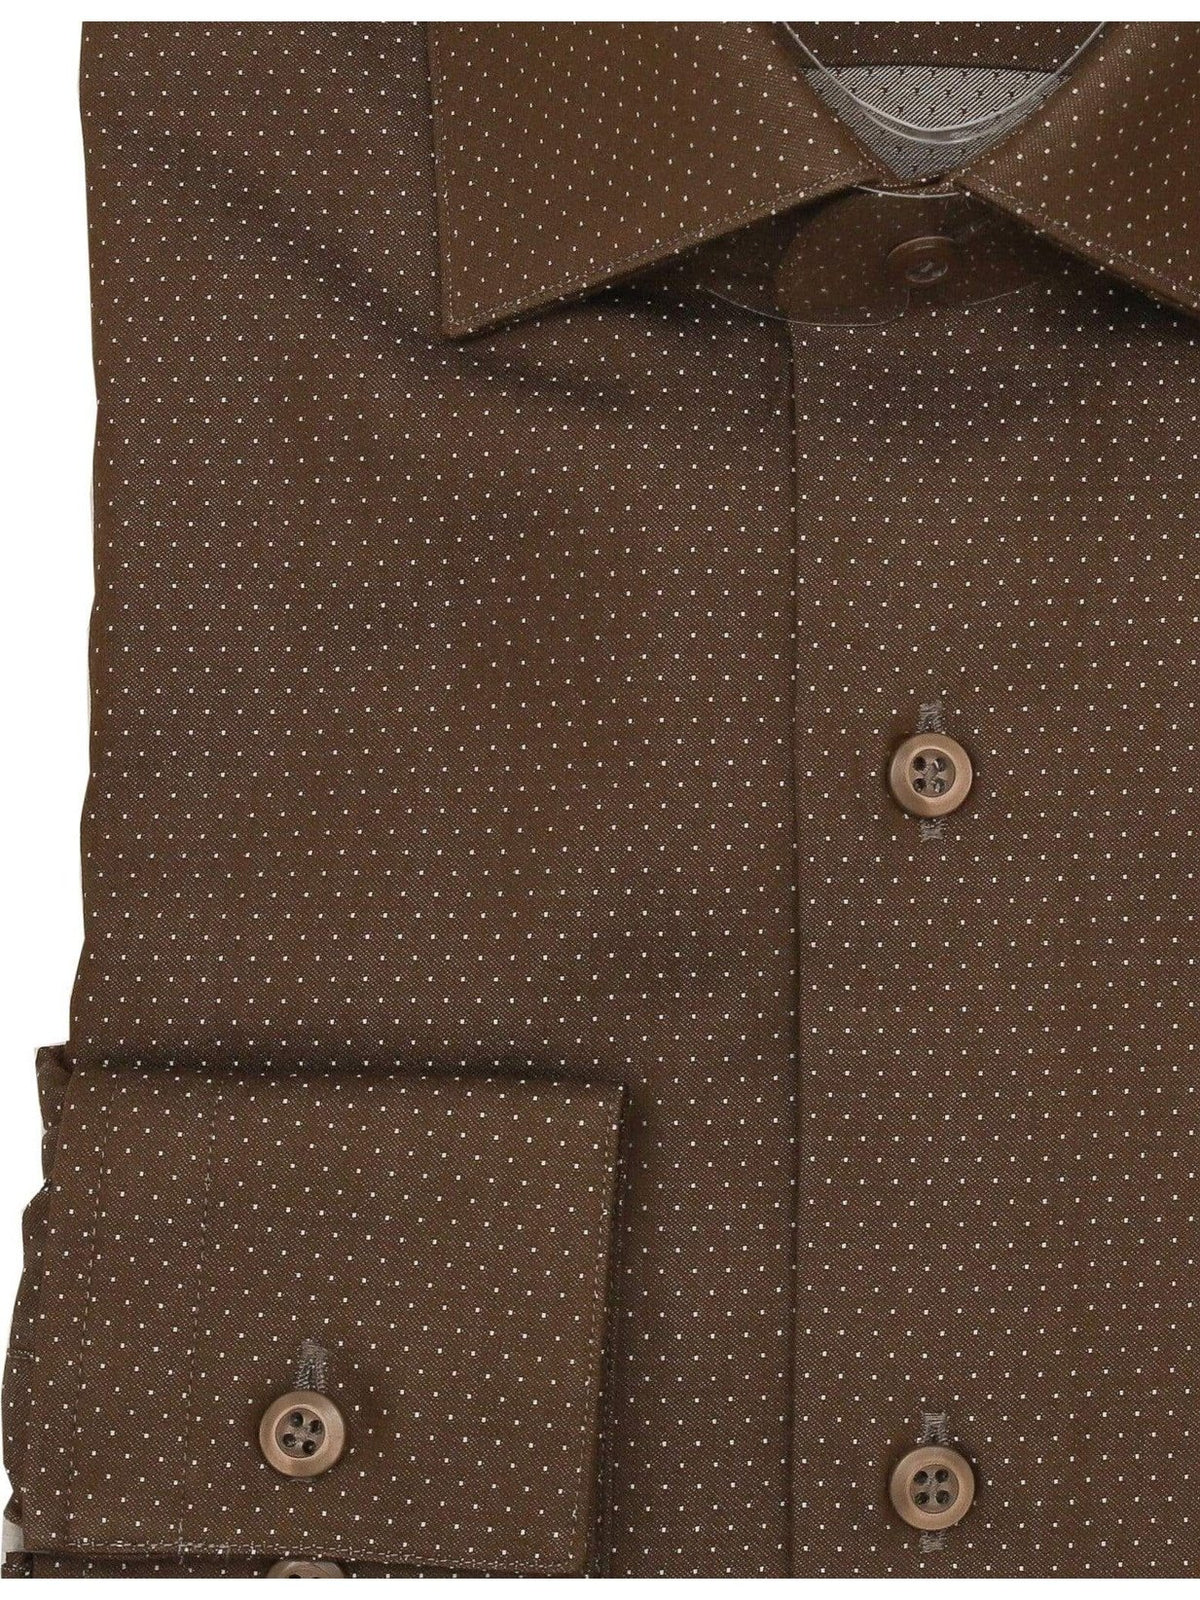 Brand M SHIRTS Men&#39;s Classic Fit Brown &amp; White Polka Dot Cutaway Collar Cotton Dress Shirt